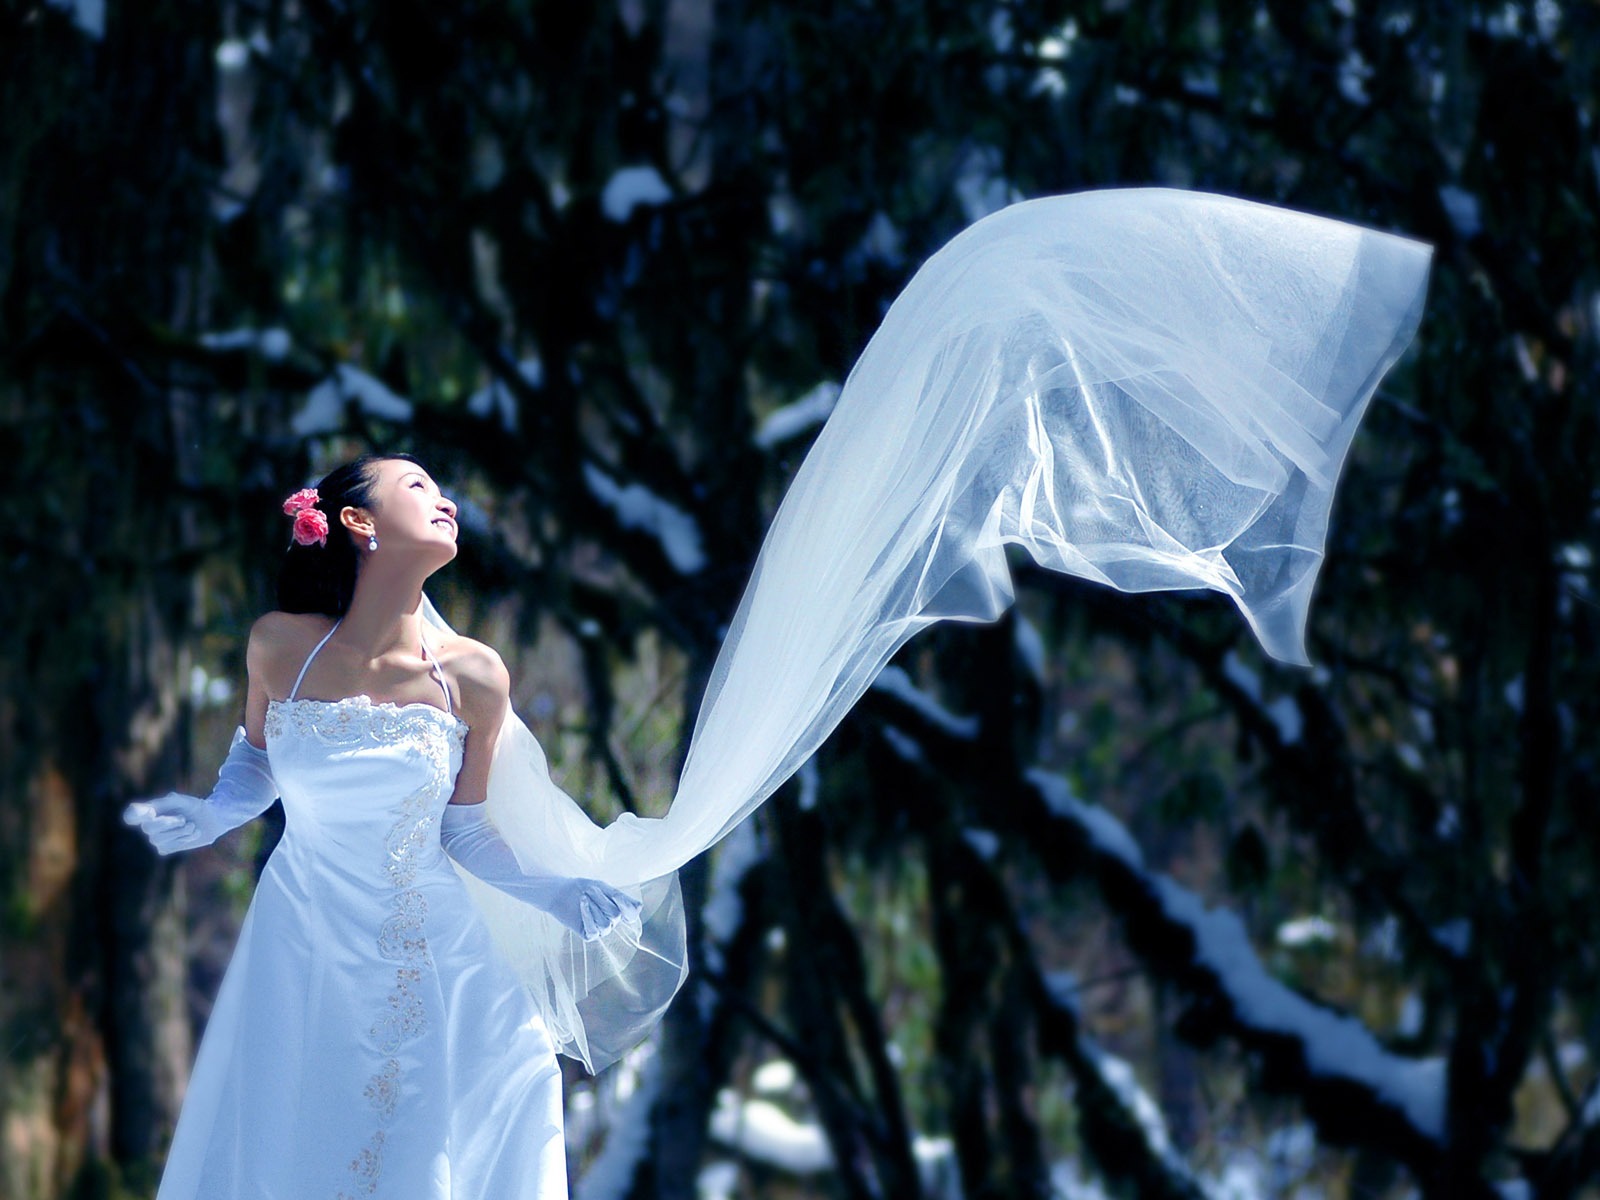 Beautiful Wedding Bride #6 - 1600x1200